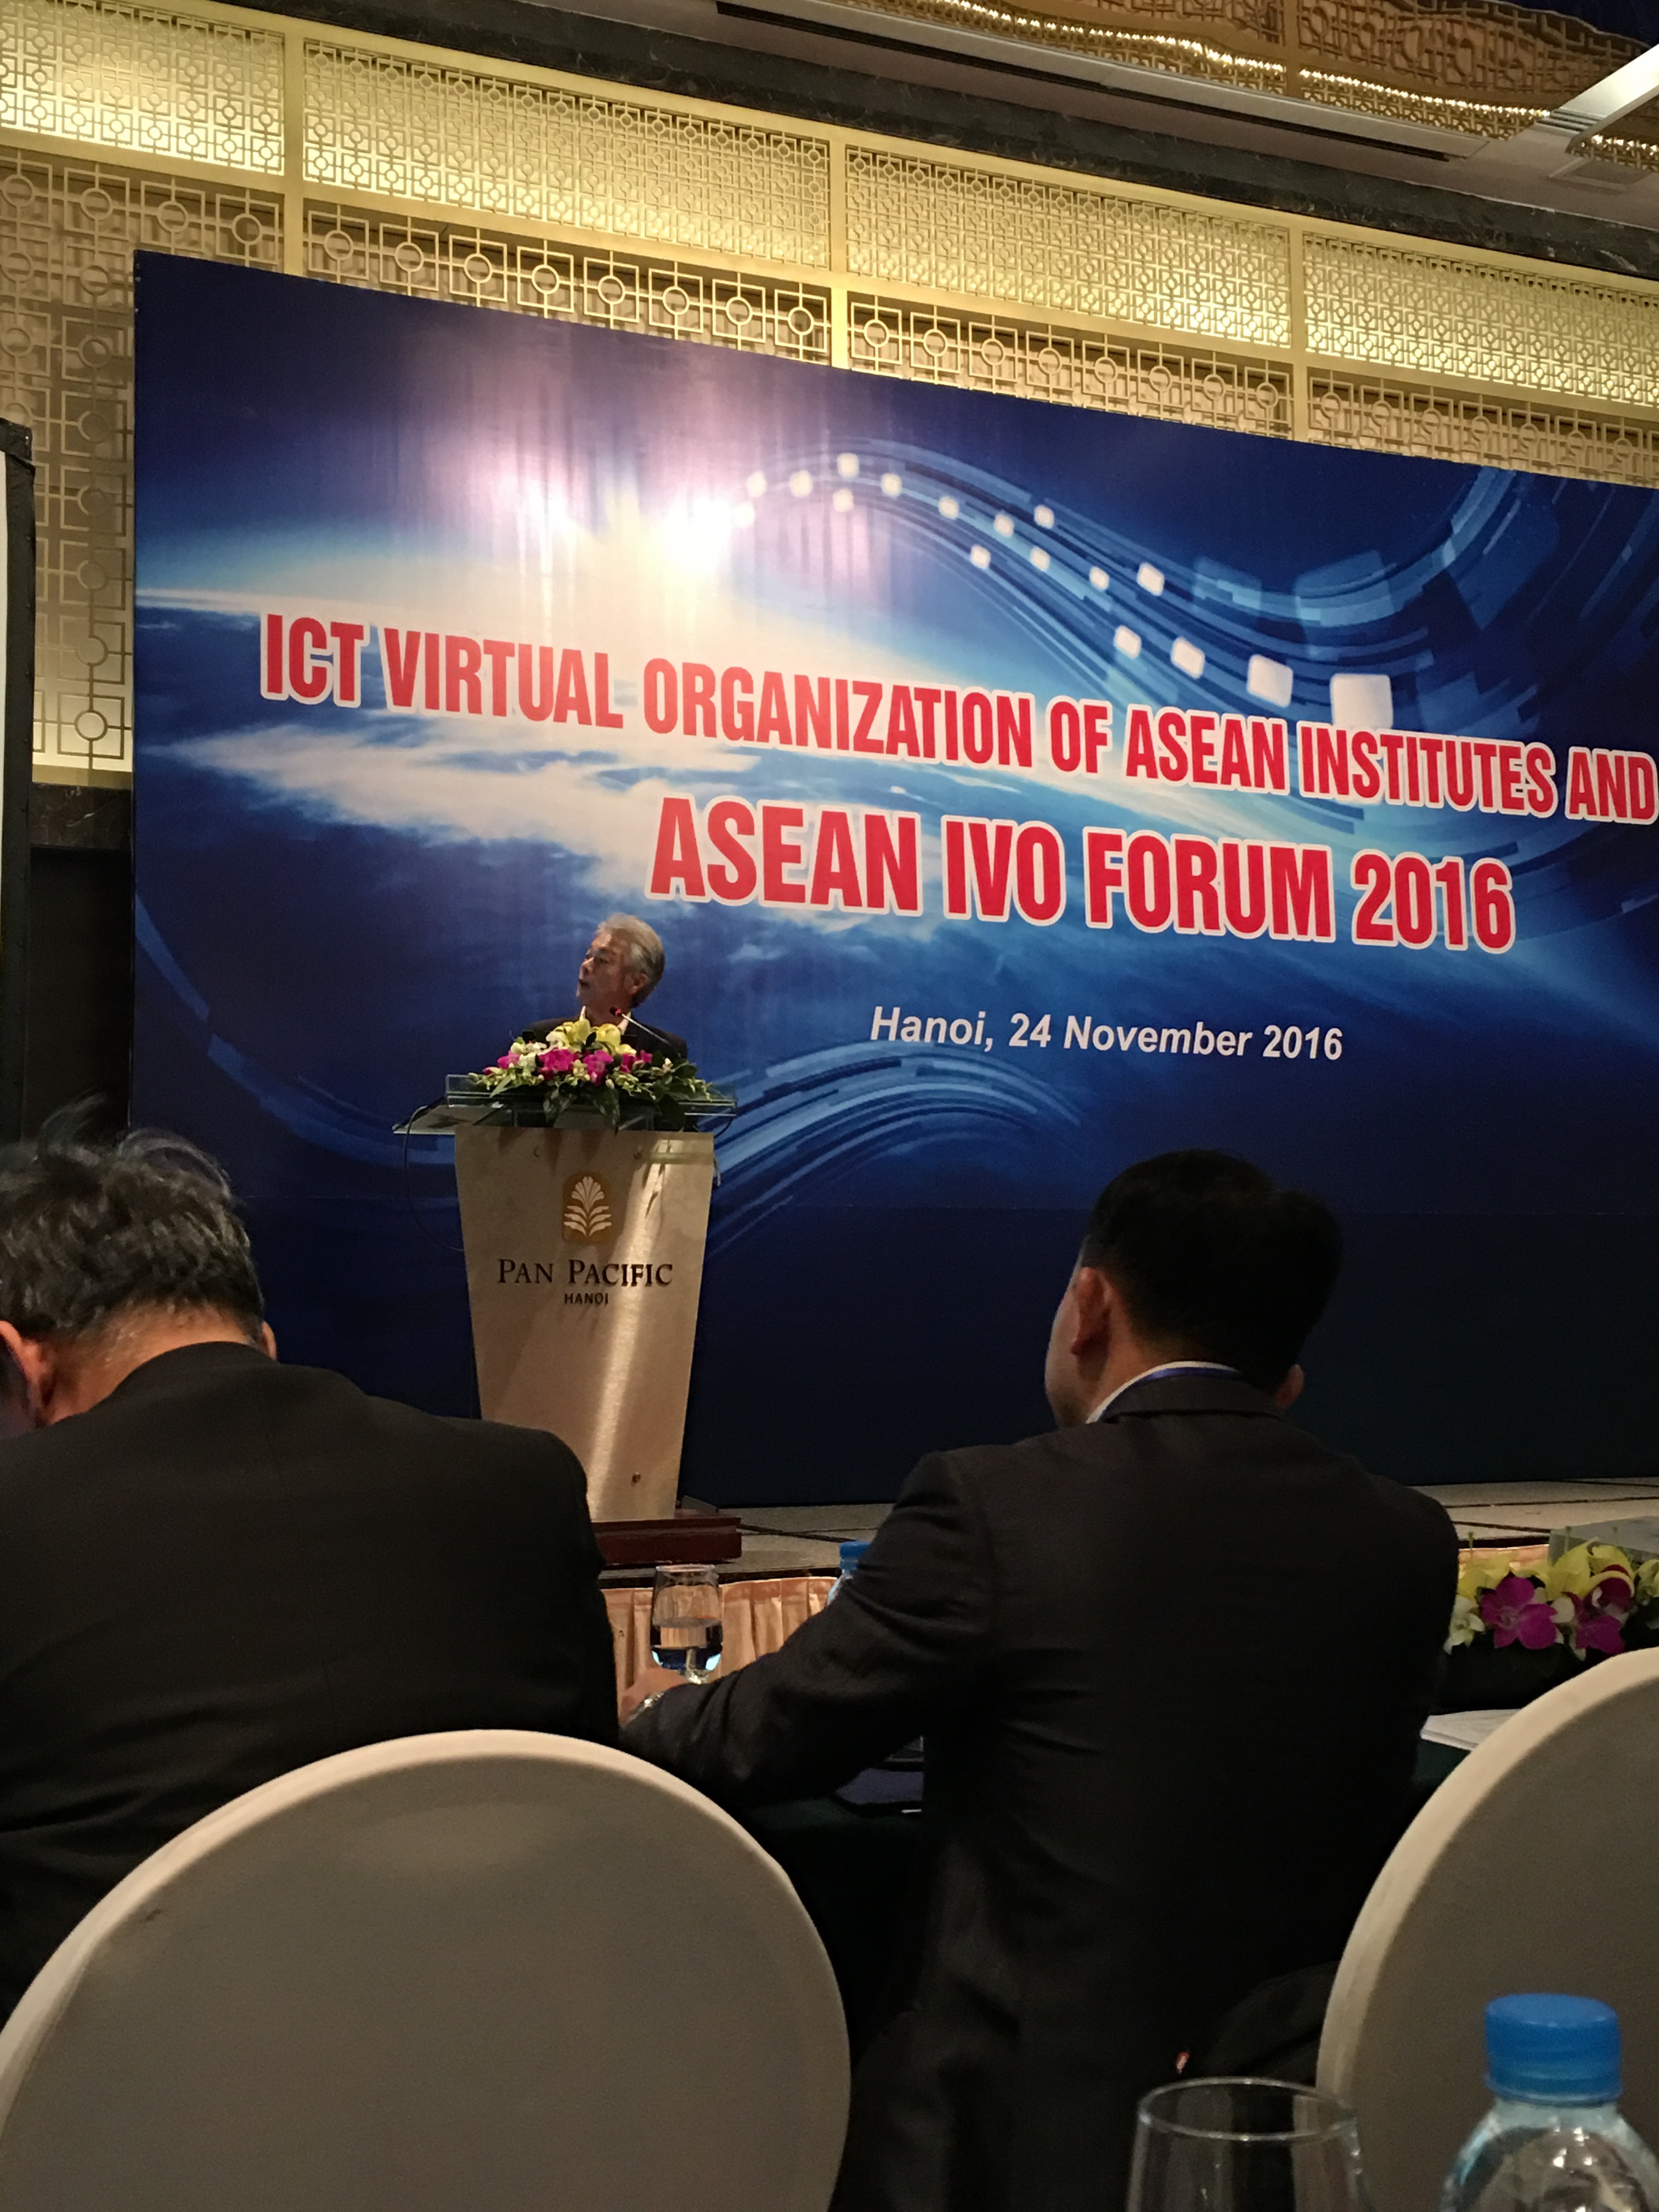 ASEAN IVO FORUM 2016 – Robiah Ahmad